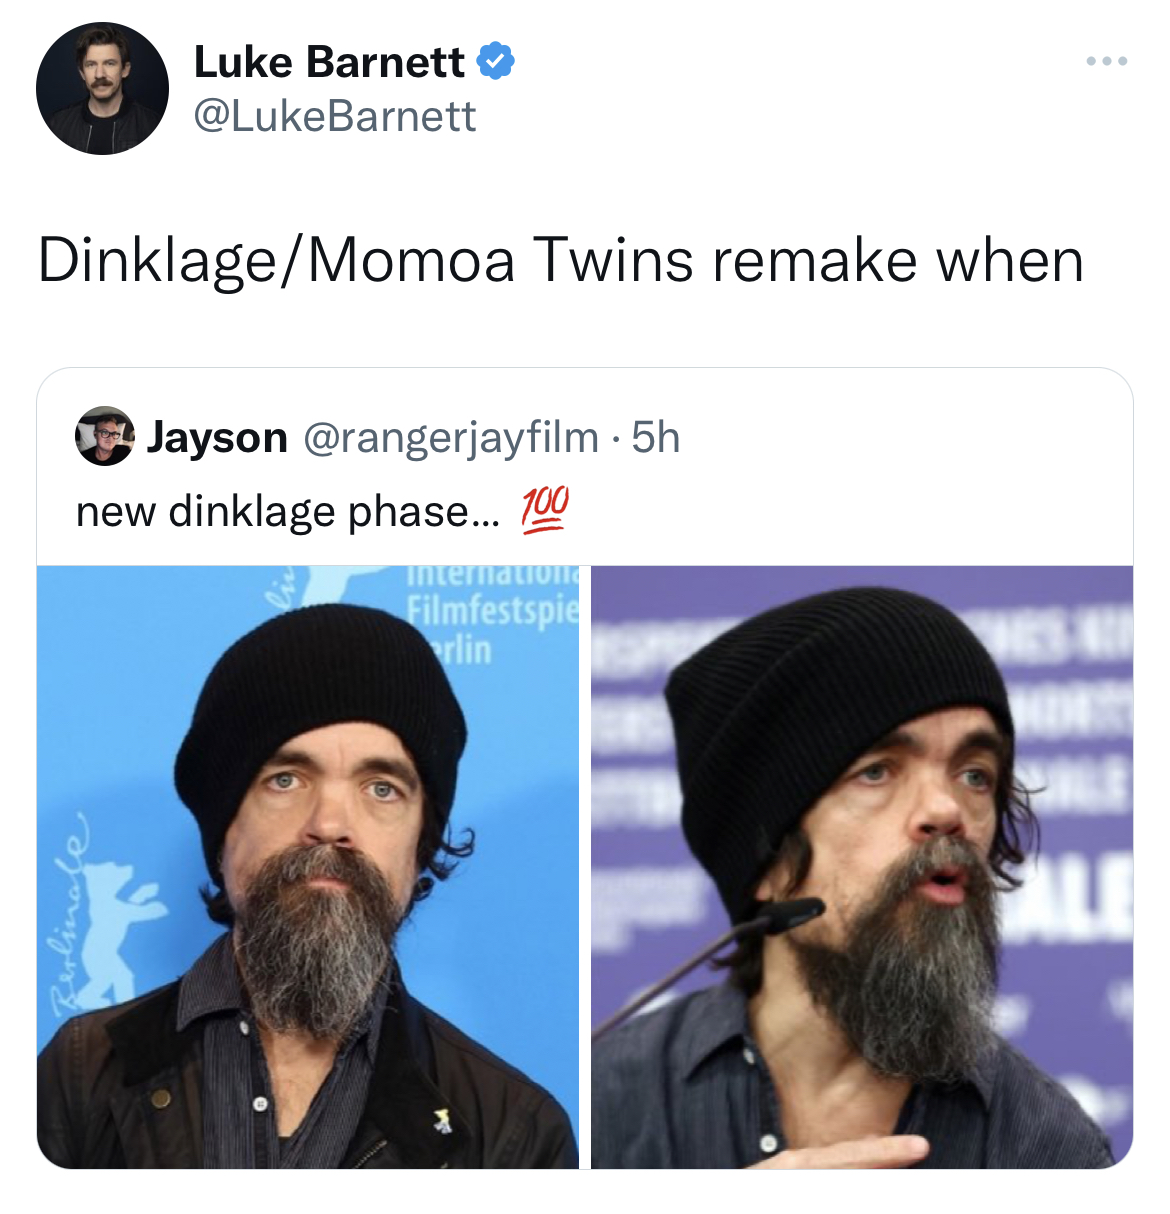 deranged tweets - beard - Luke Barnett DinklageMomoa Twins remake when Jayson 5h new dinklage phase... 100 internation Filmfestspie lin